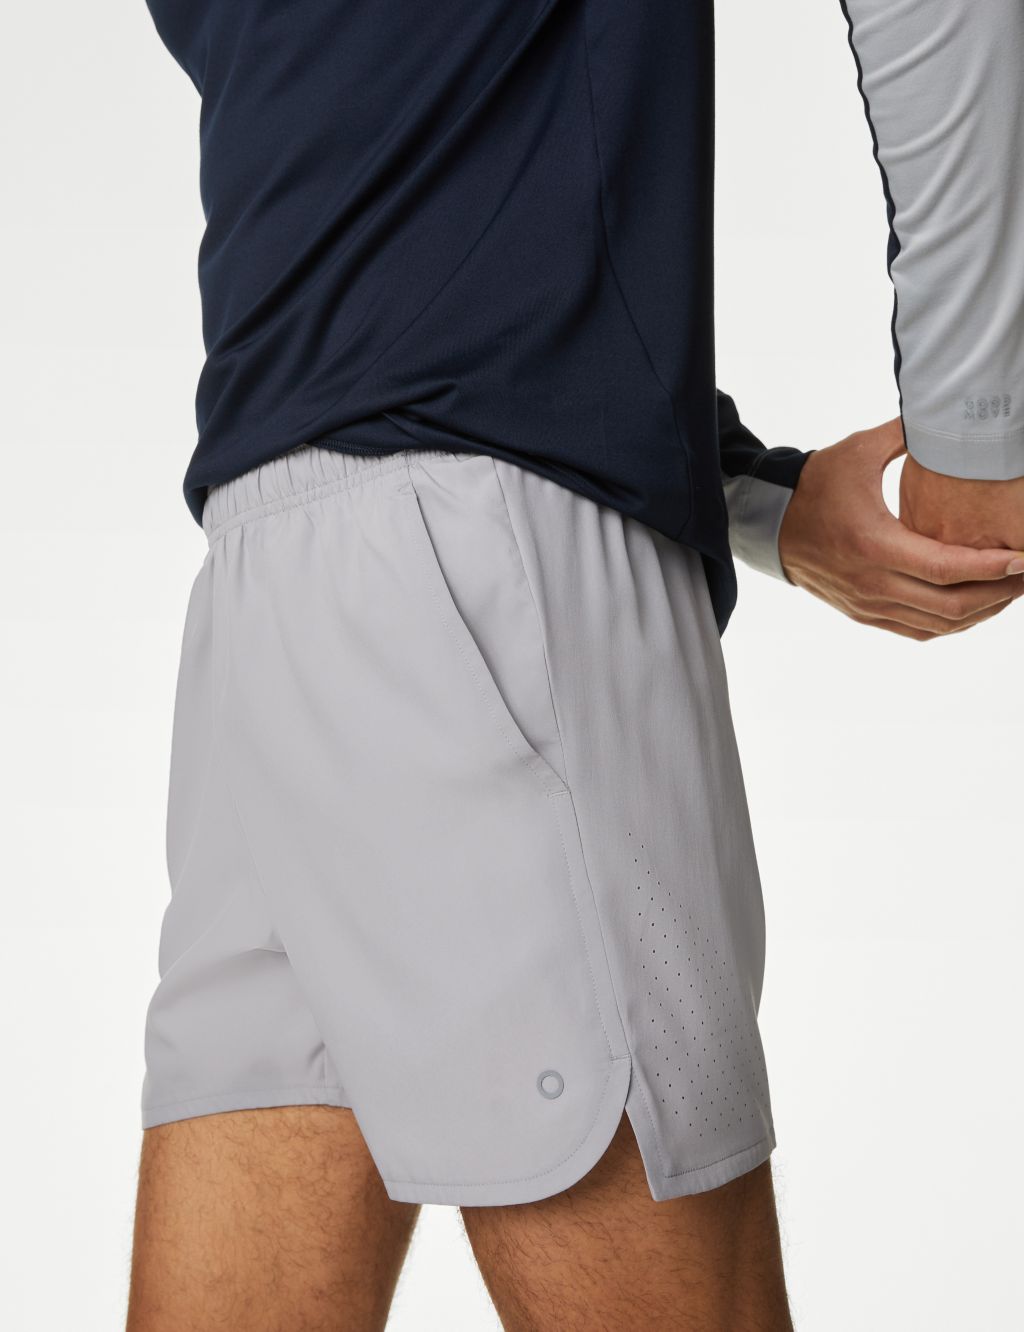 Zip Pocket Running Shorts image 1